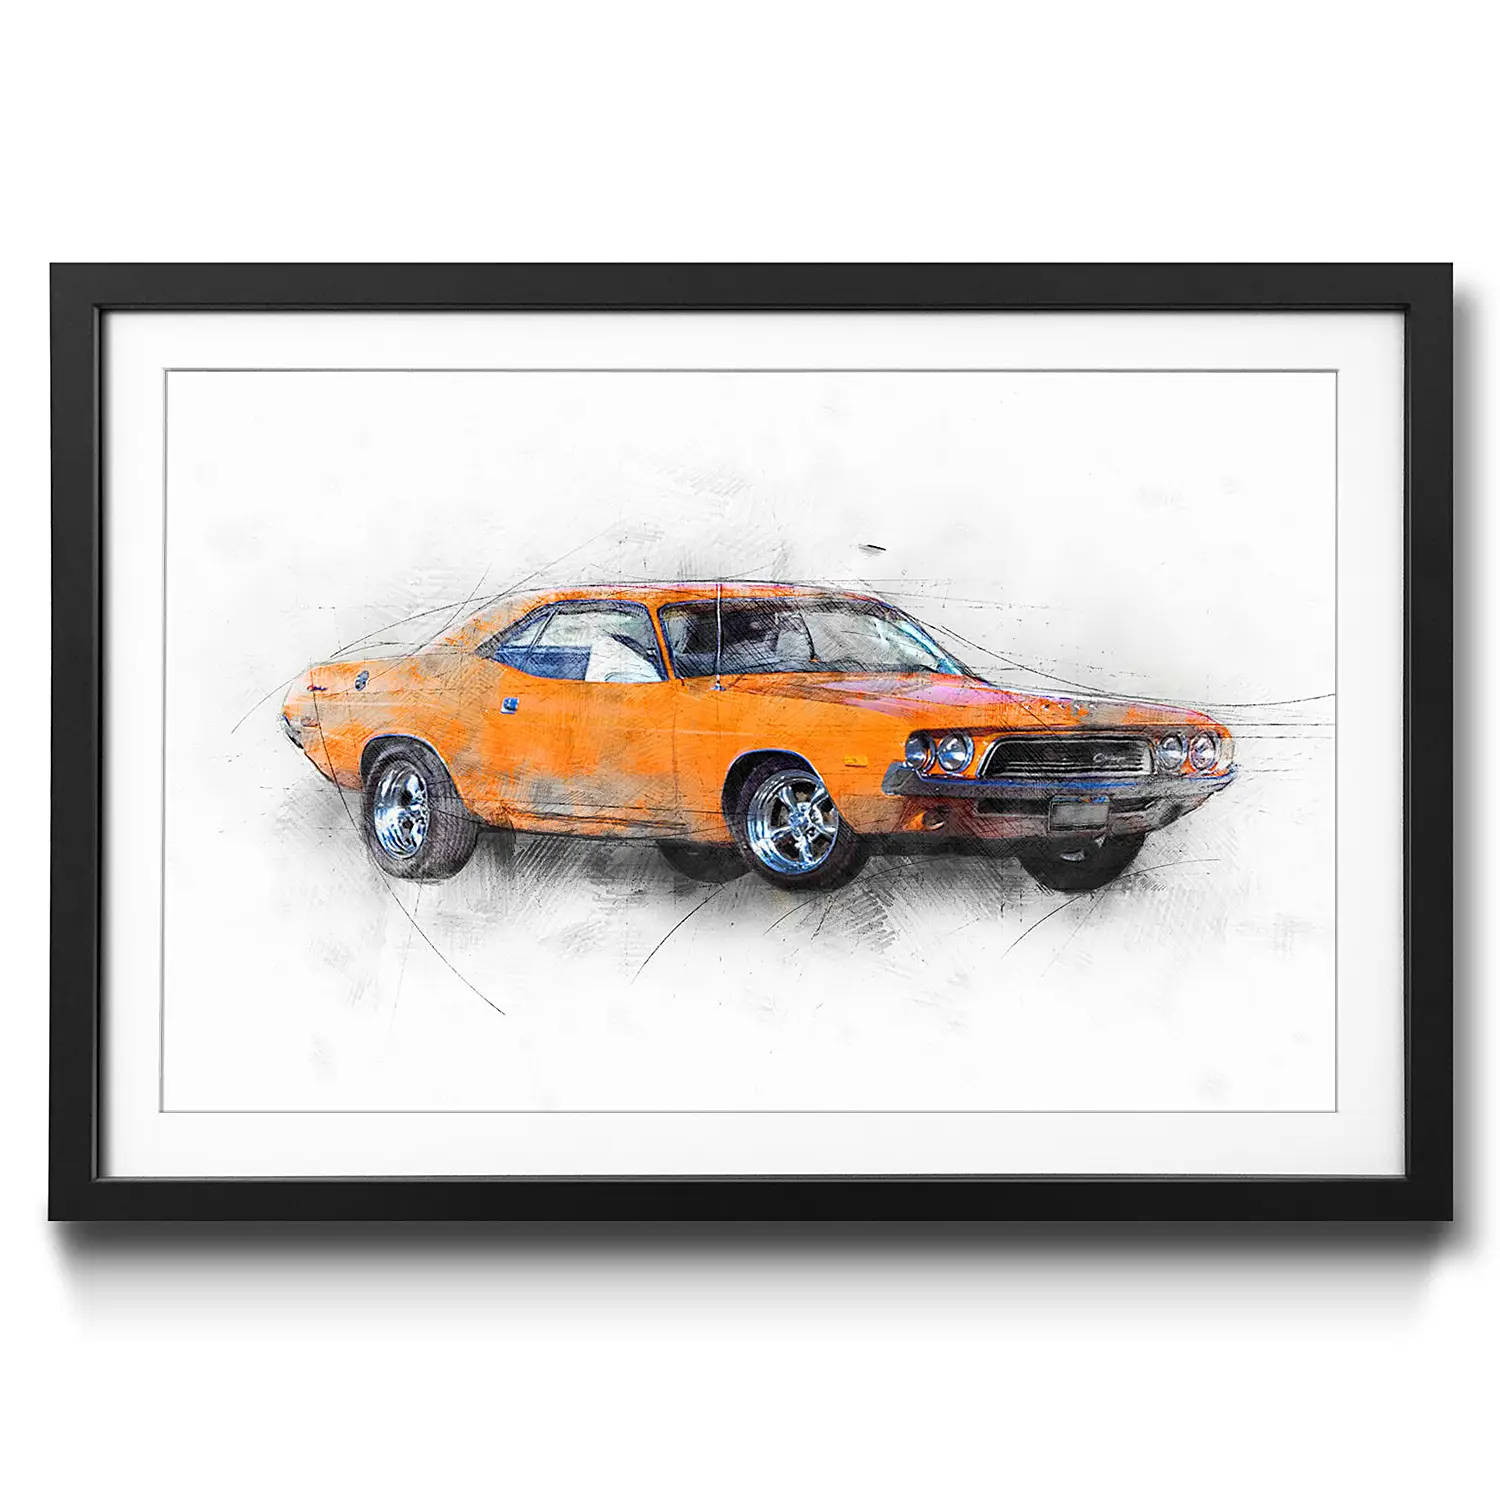 Gerahmtes Bild Orange Muscle Car